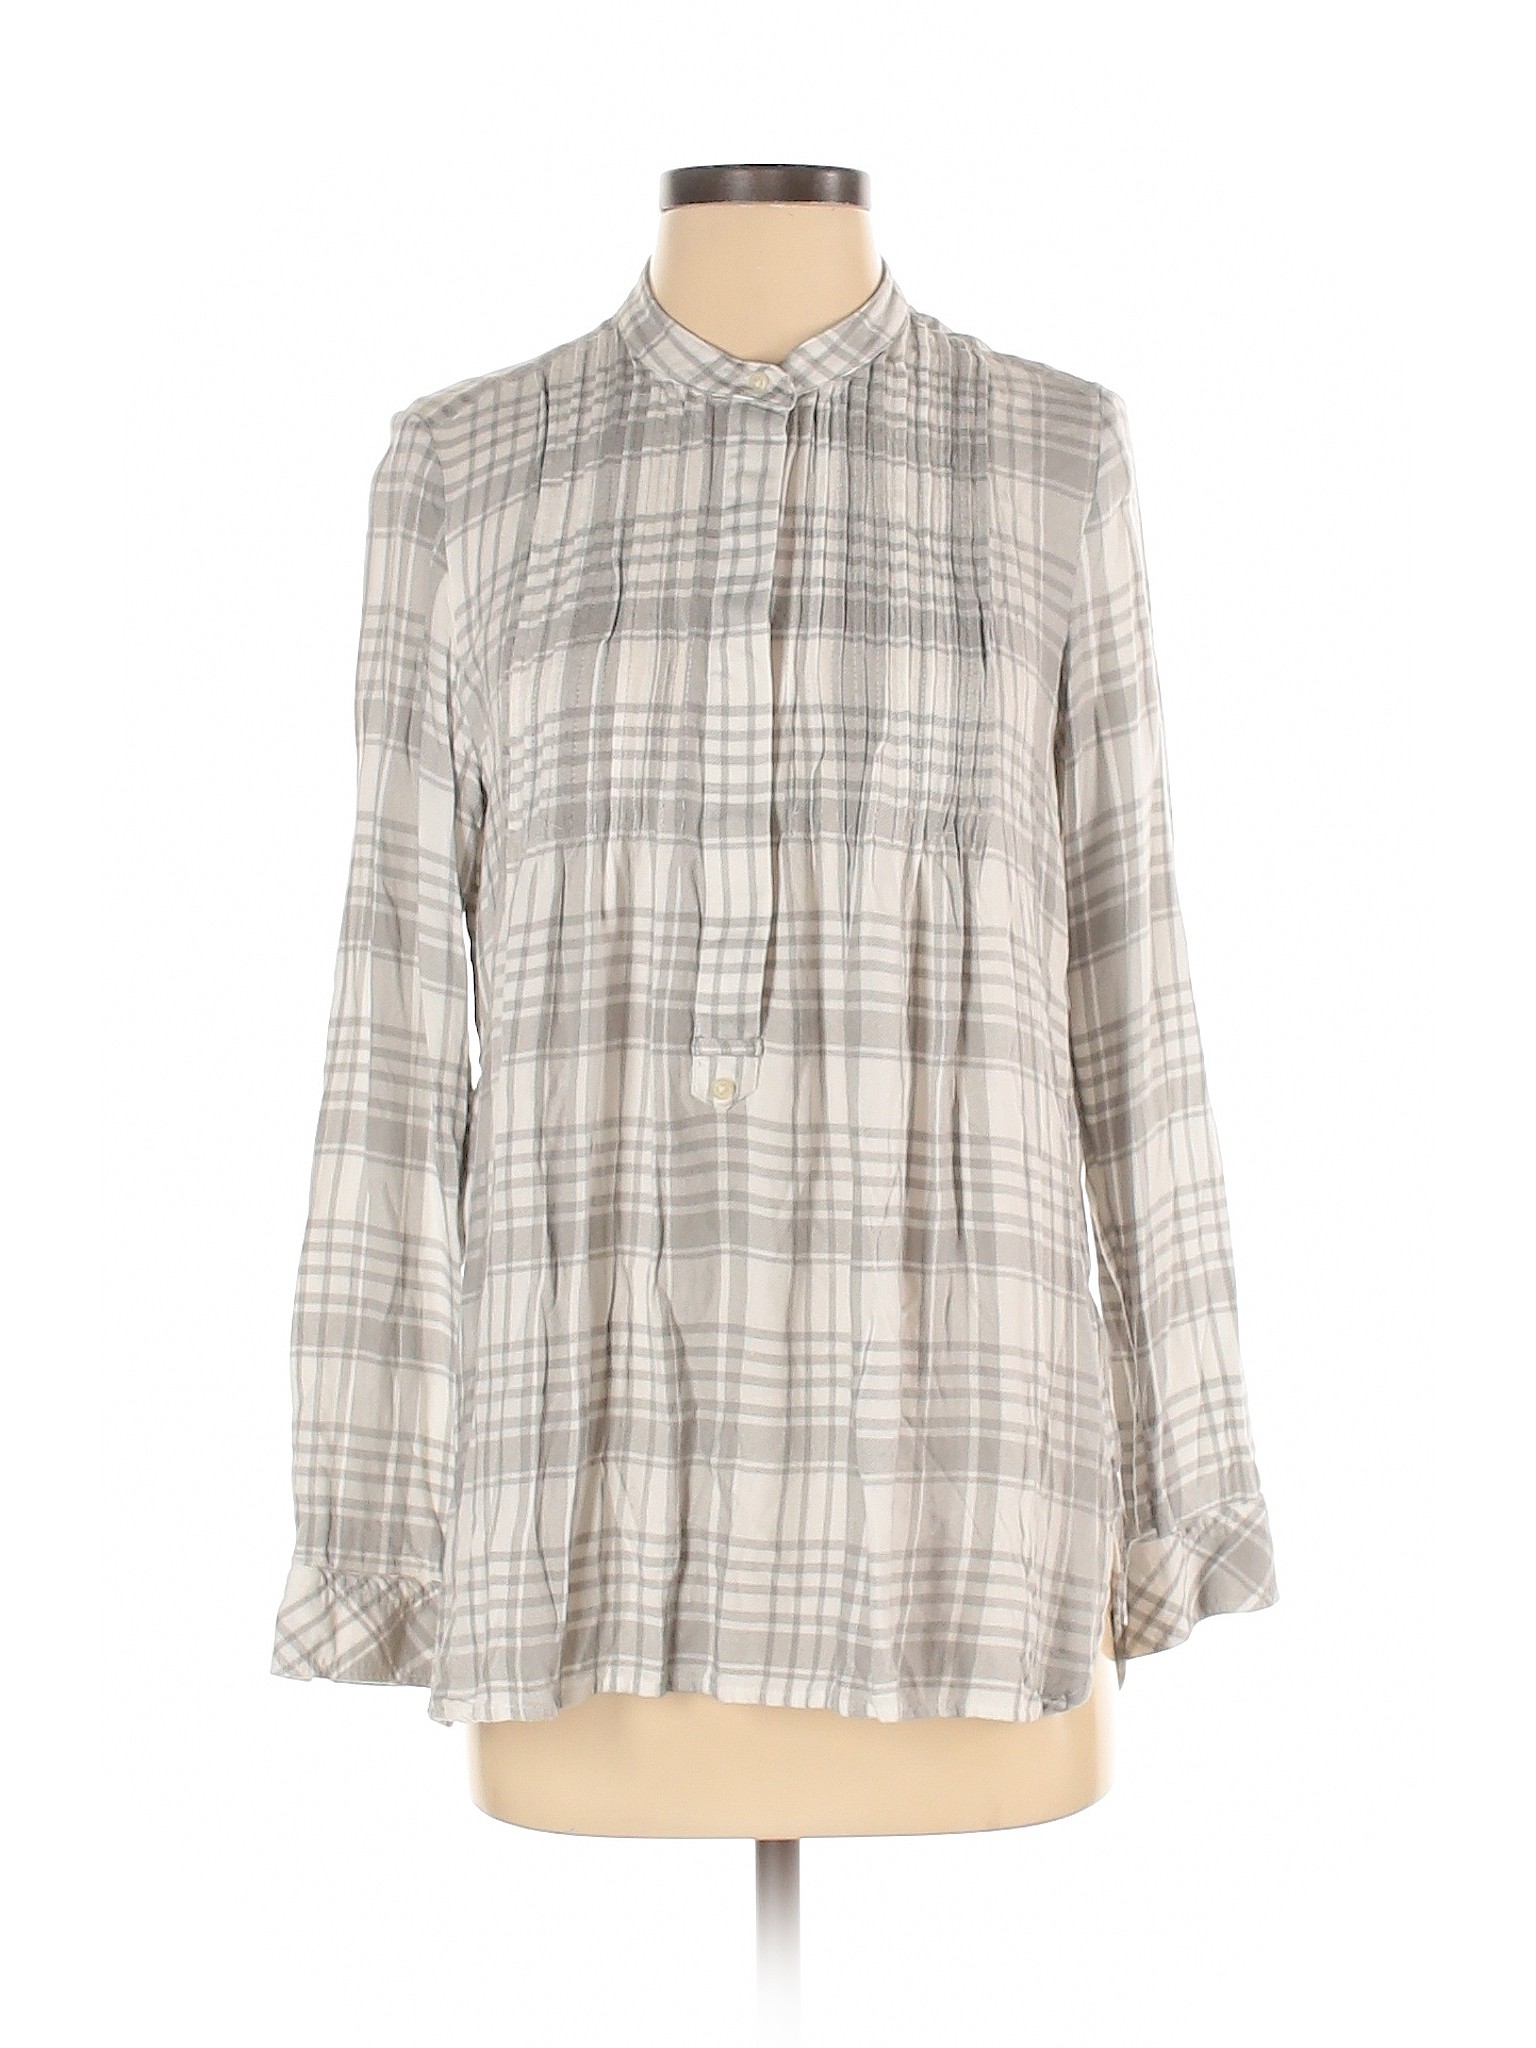 Gap Women Gray Long Sleeve Blouse S | eBay